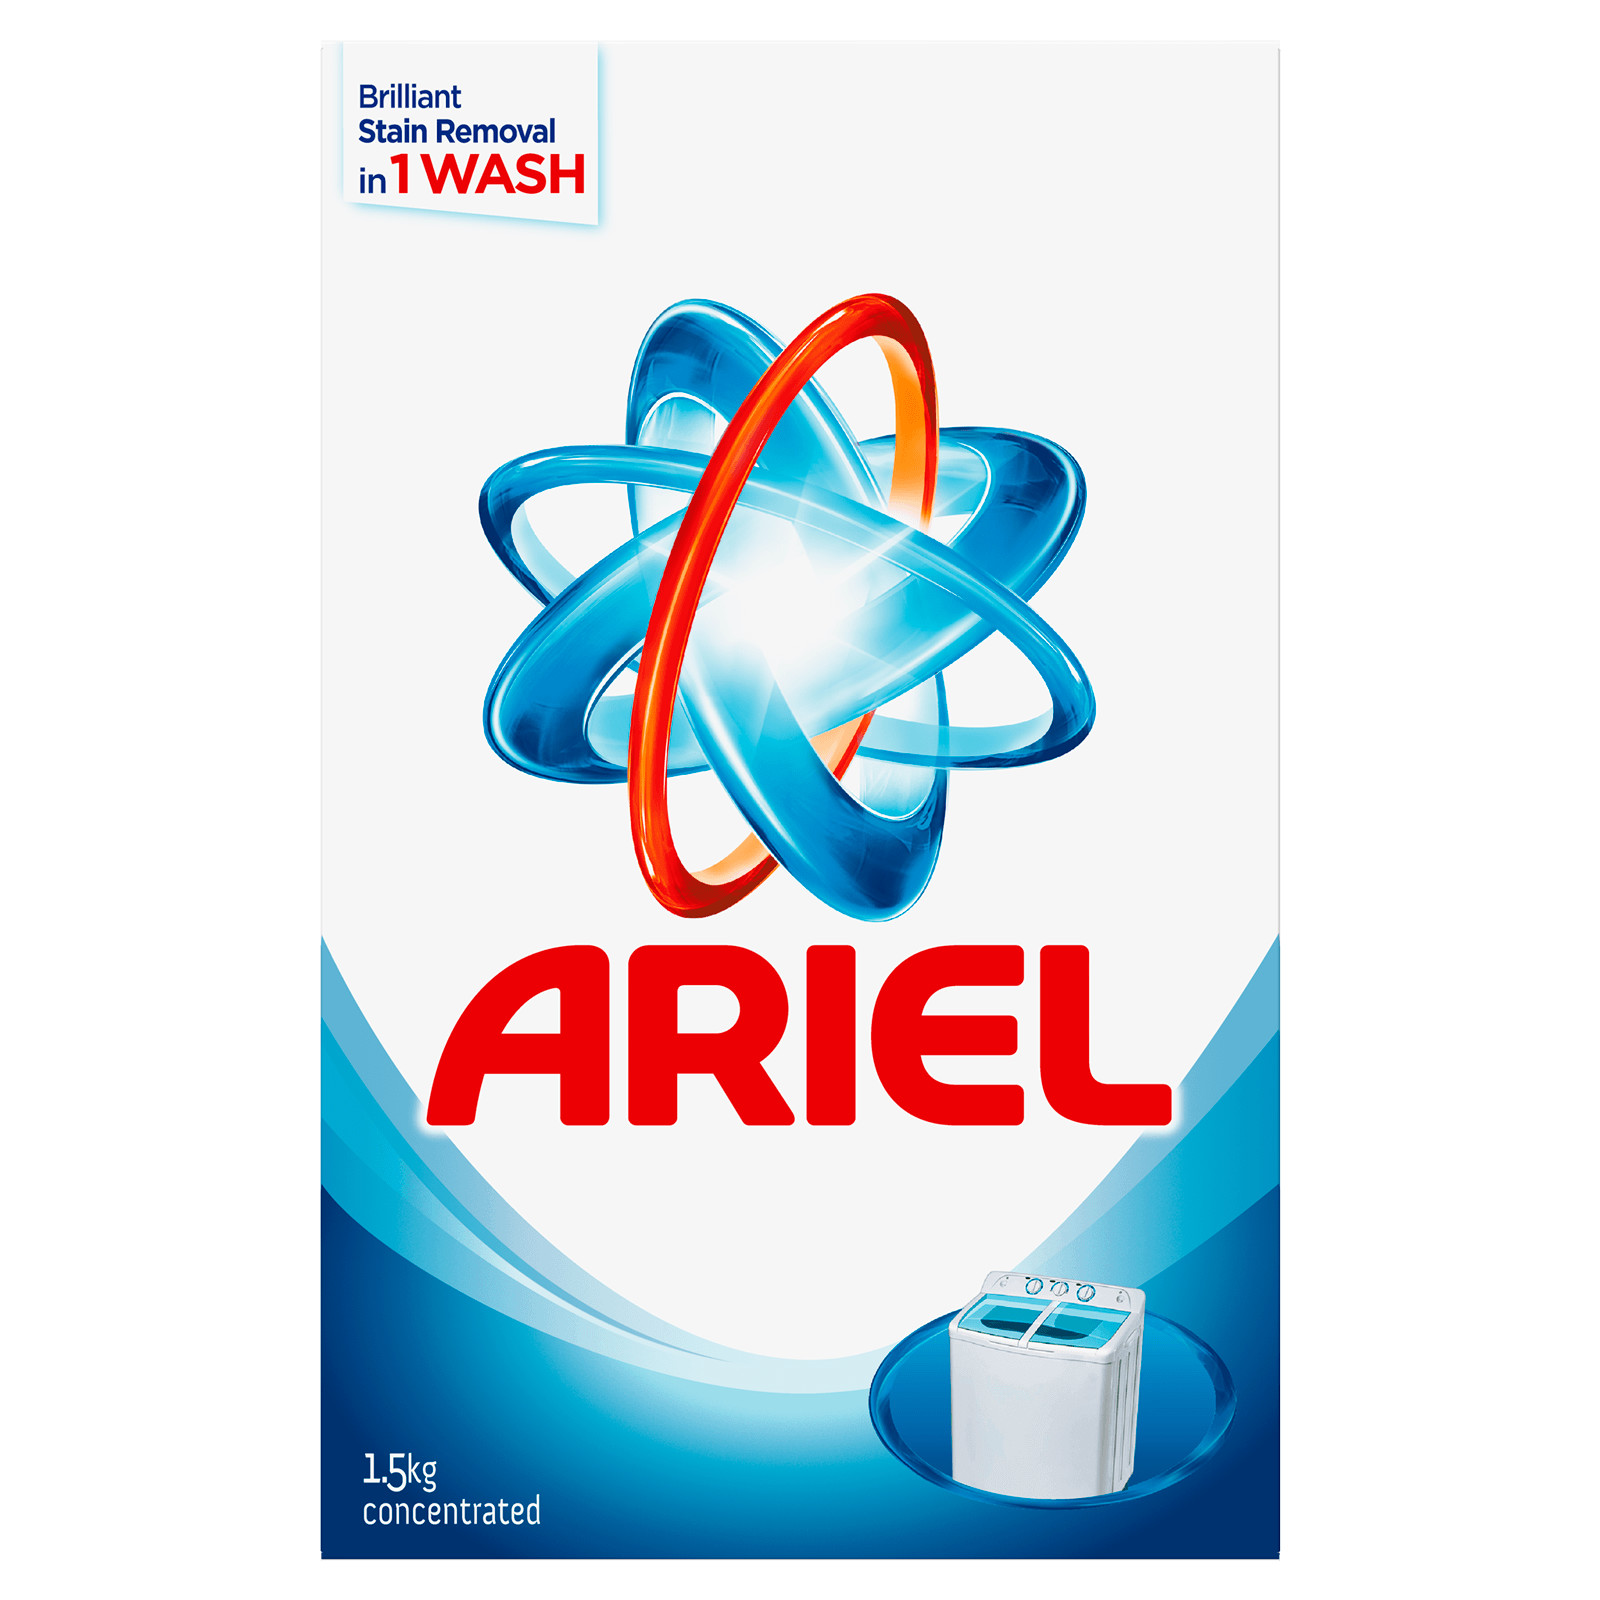 Ariel Washing Powder Laundry Detergent Original Perfume